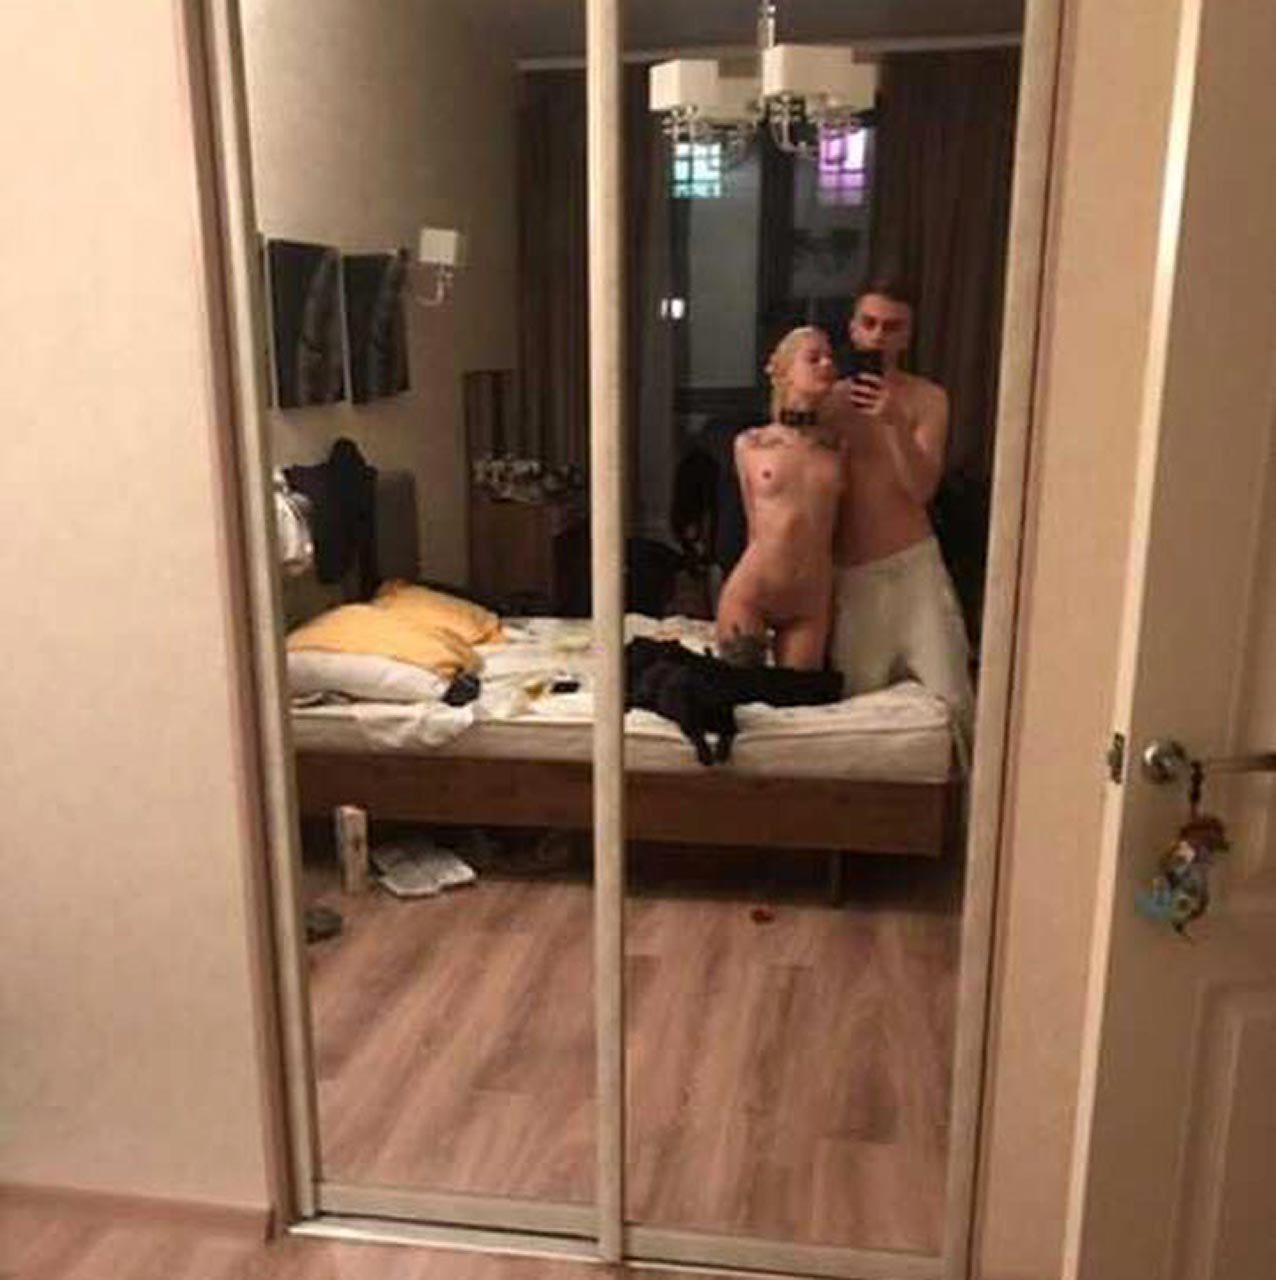 Gtfobae Nude Pics & Porn Leaked Online from iCloud - ScandalPost